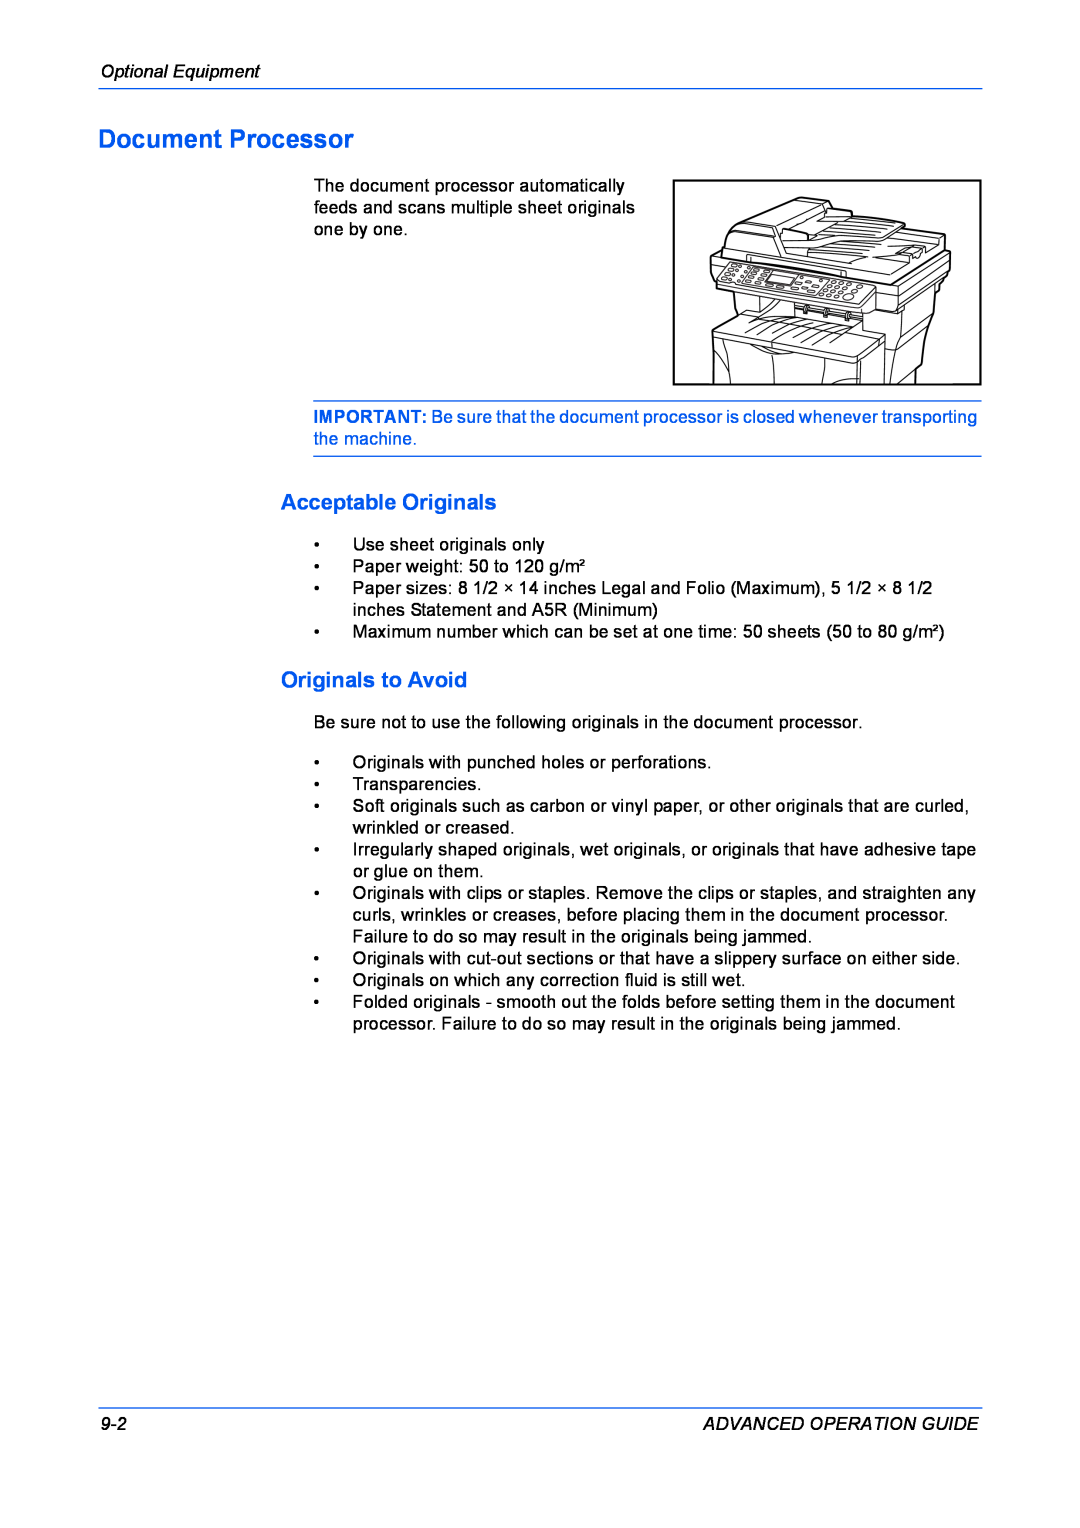 Kyocera KM-1820 manual Document Processor, Acceptable Originals, Originals to Avoid 